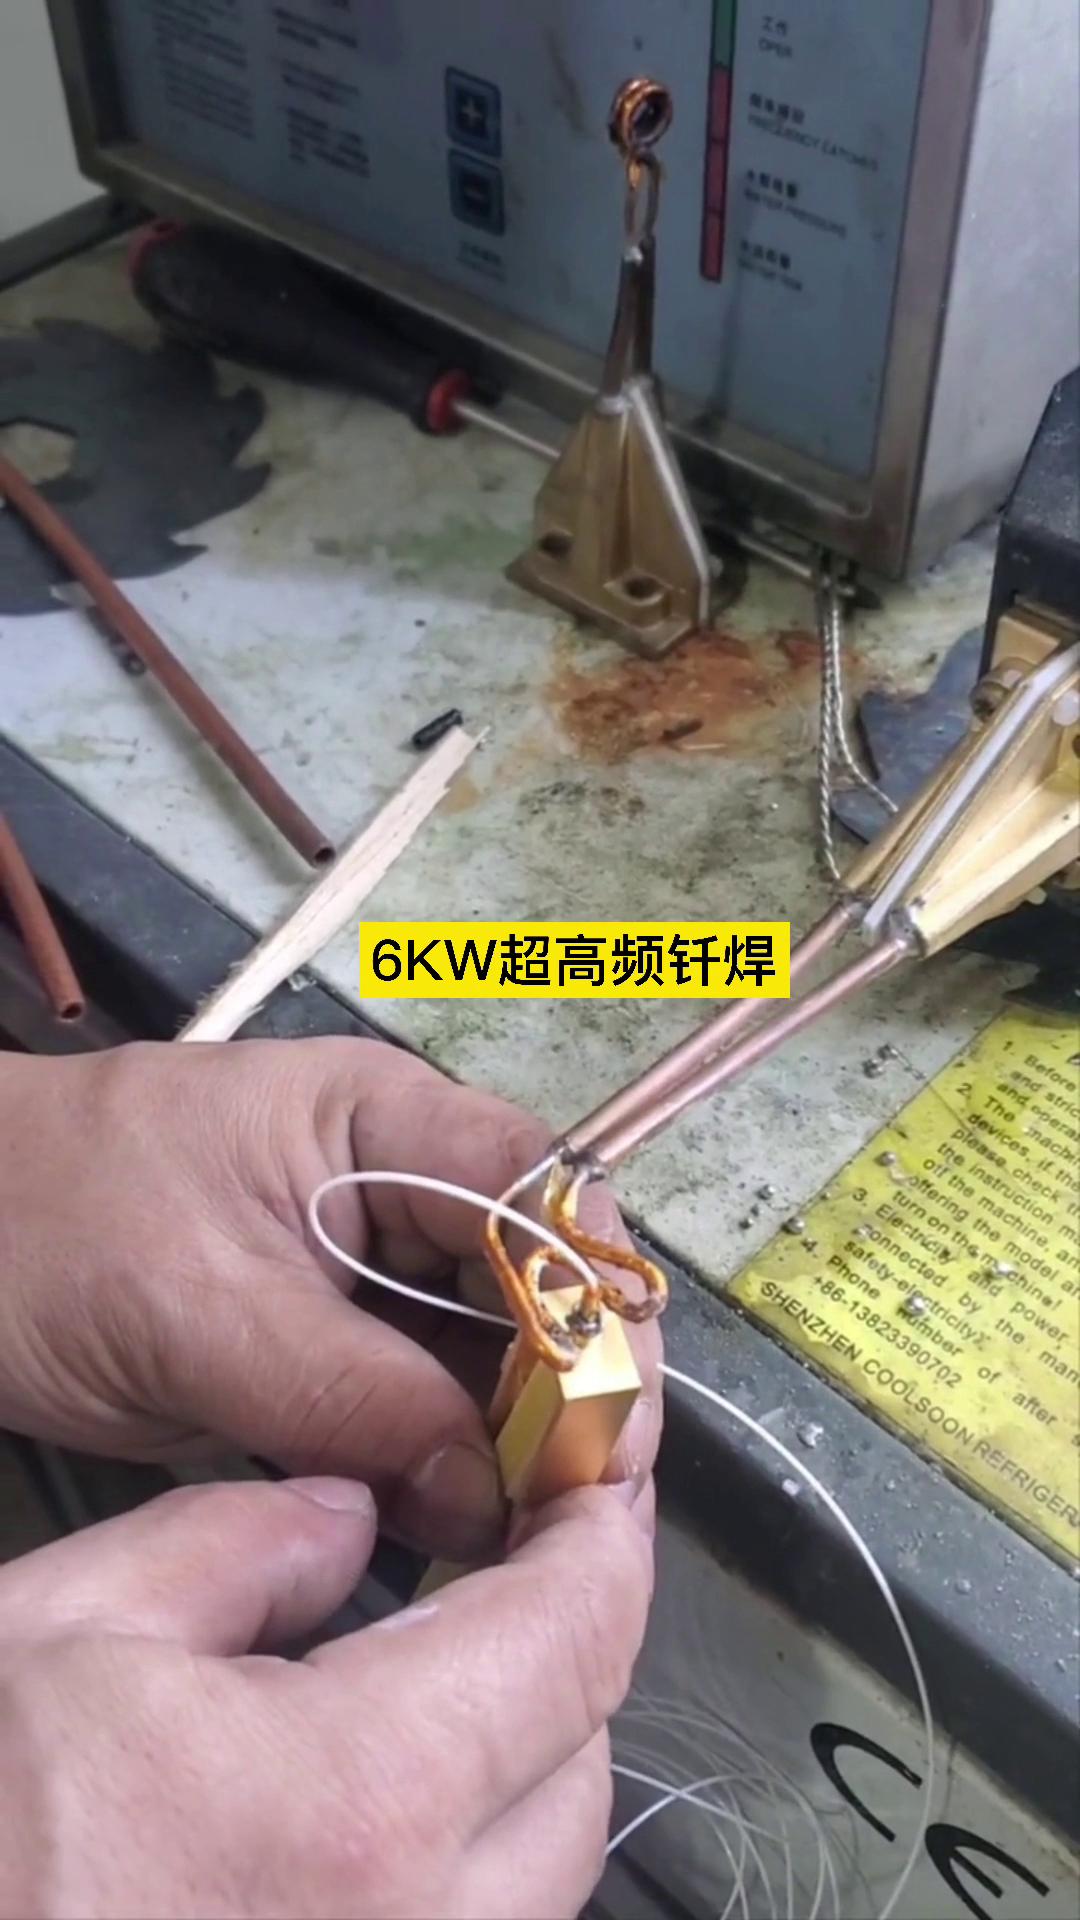 6kw超高频加热焊接机 航空航天线性器材钎焊实验